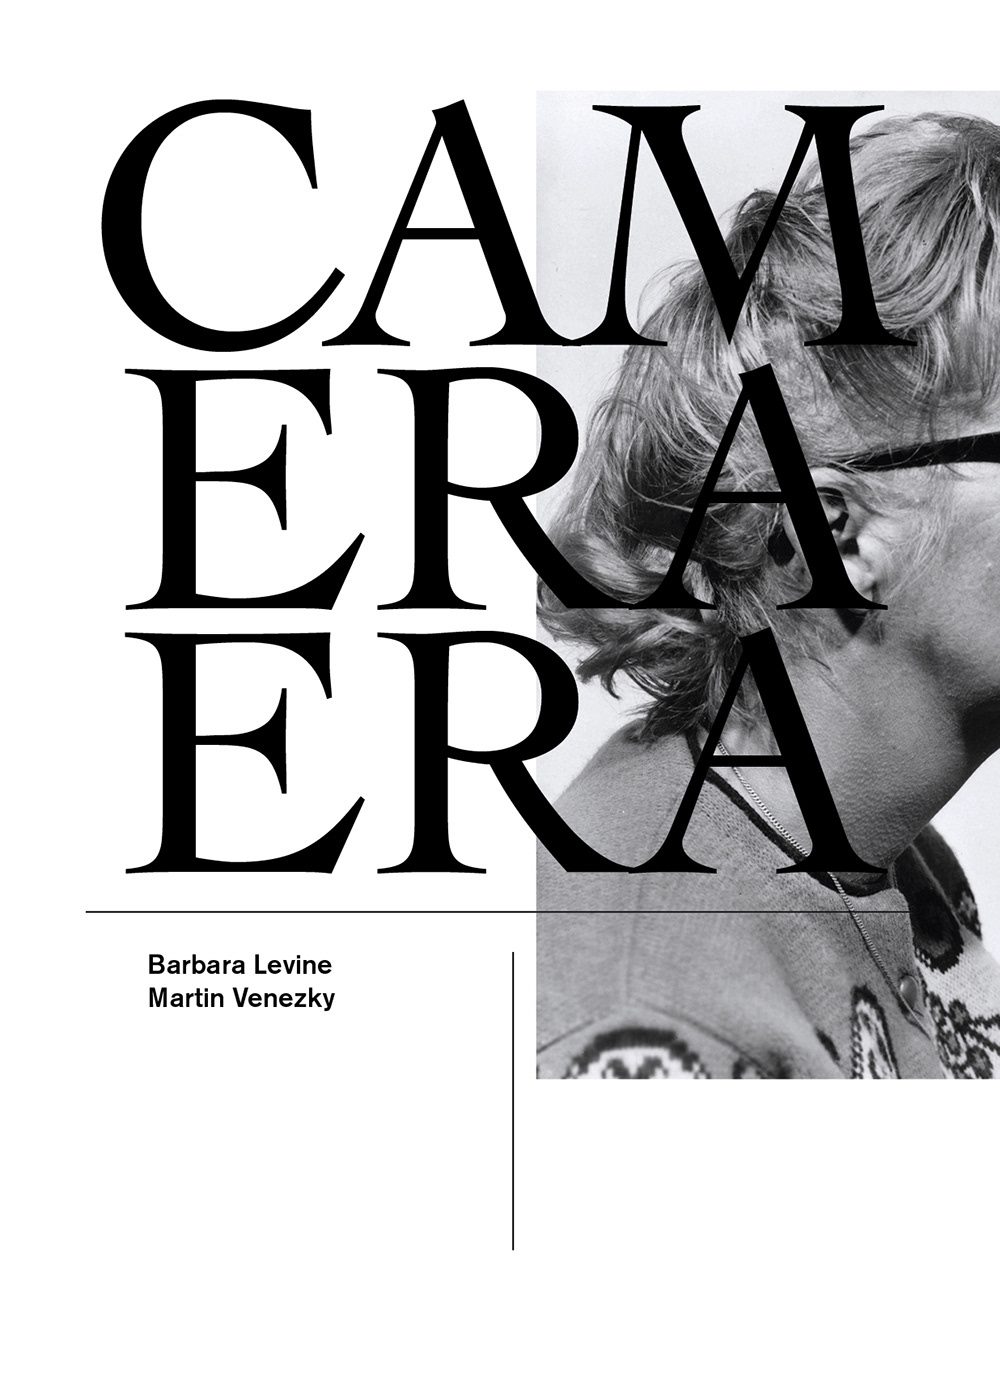 photographic history art book Collaboration publishing   publication design book design ephemera curation